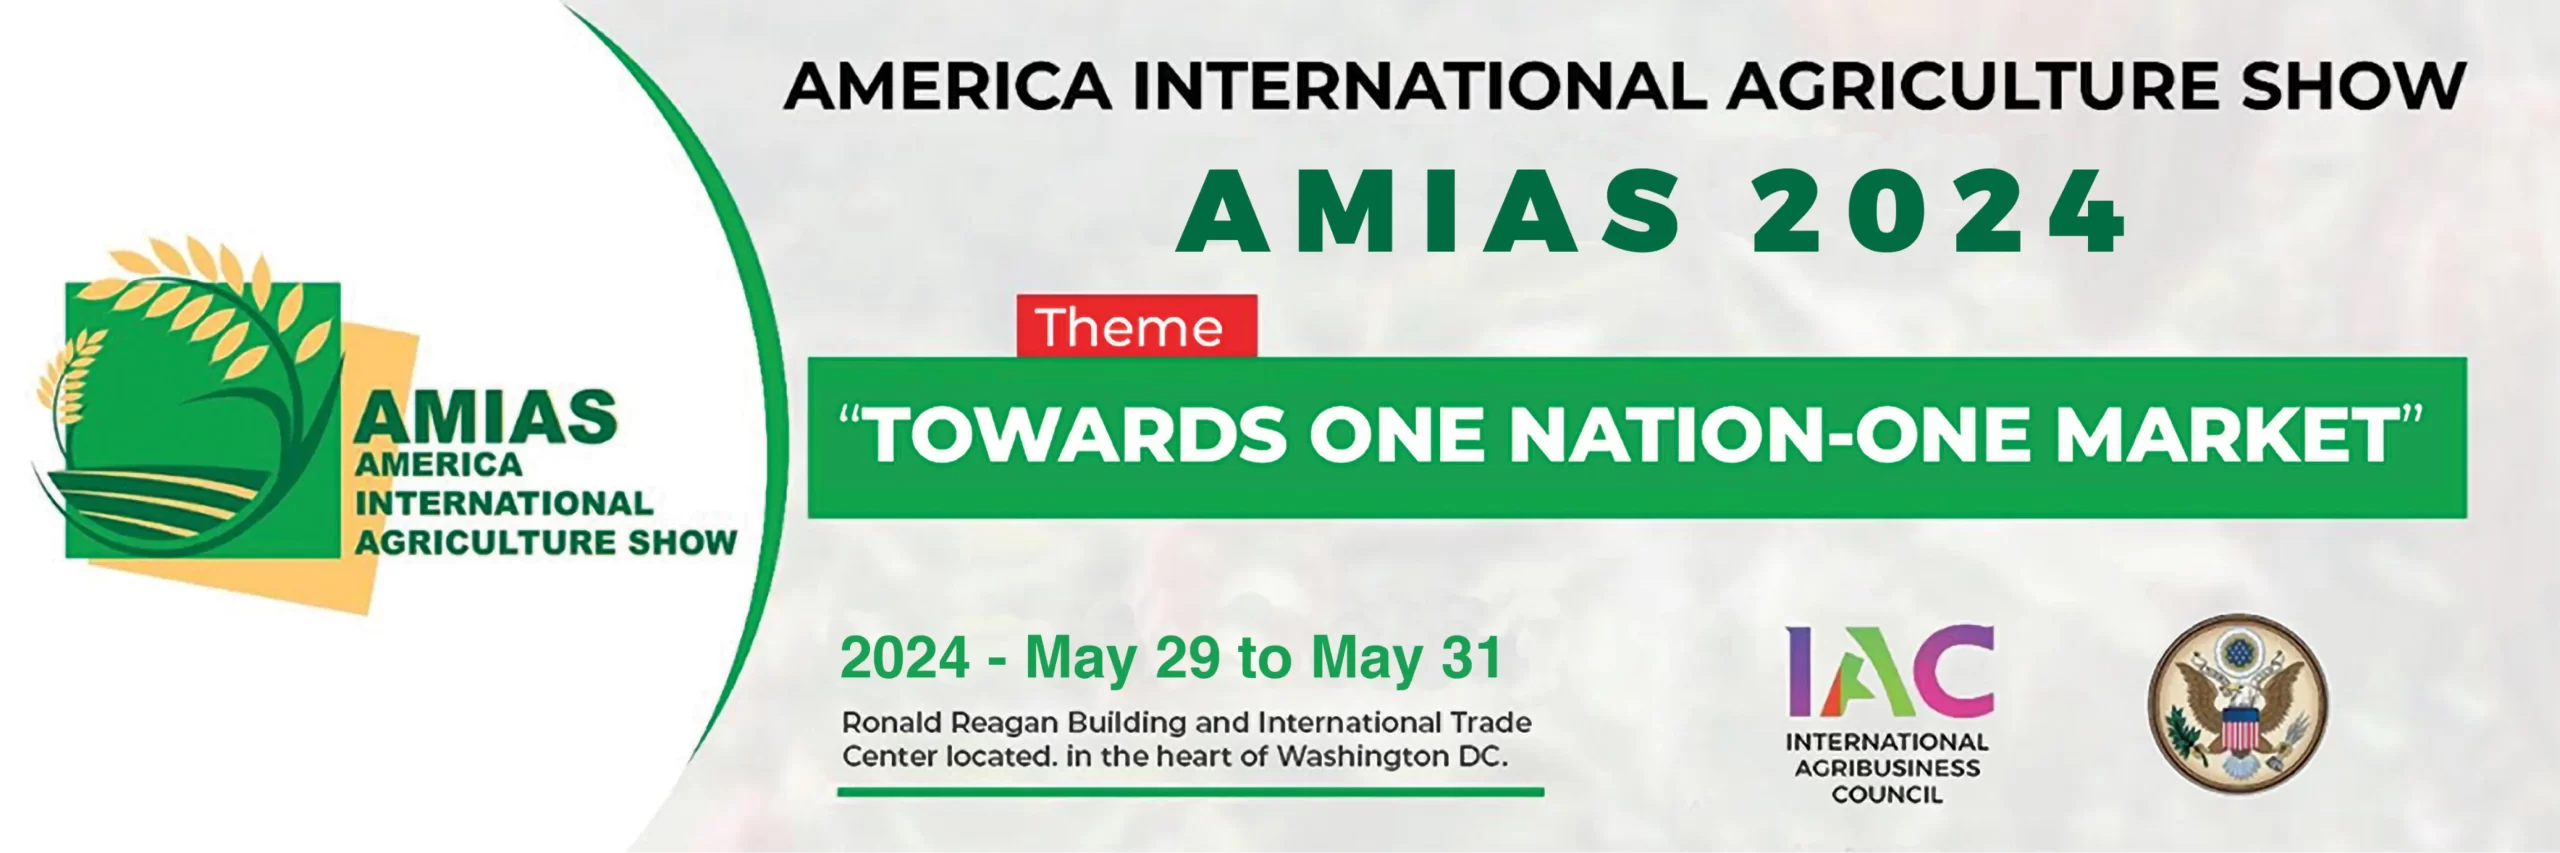 amias-agriculture-event-dates